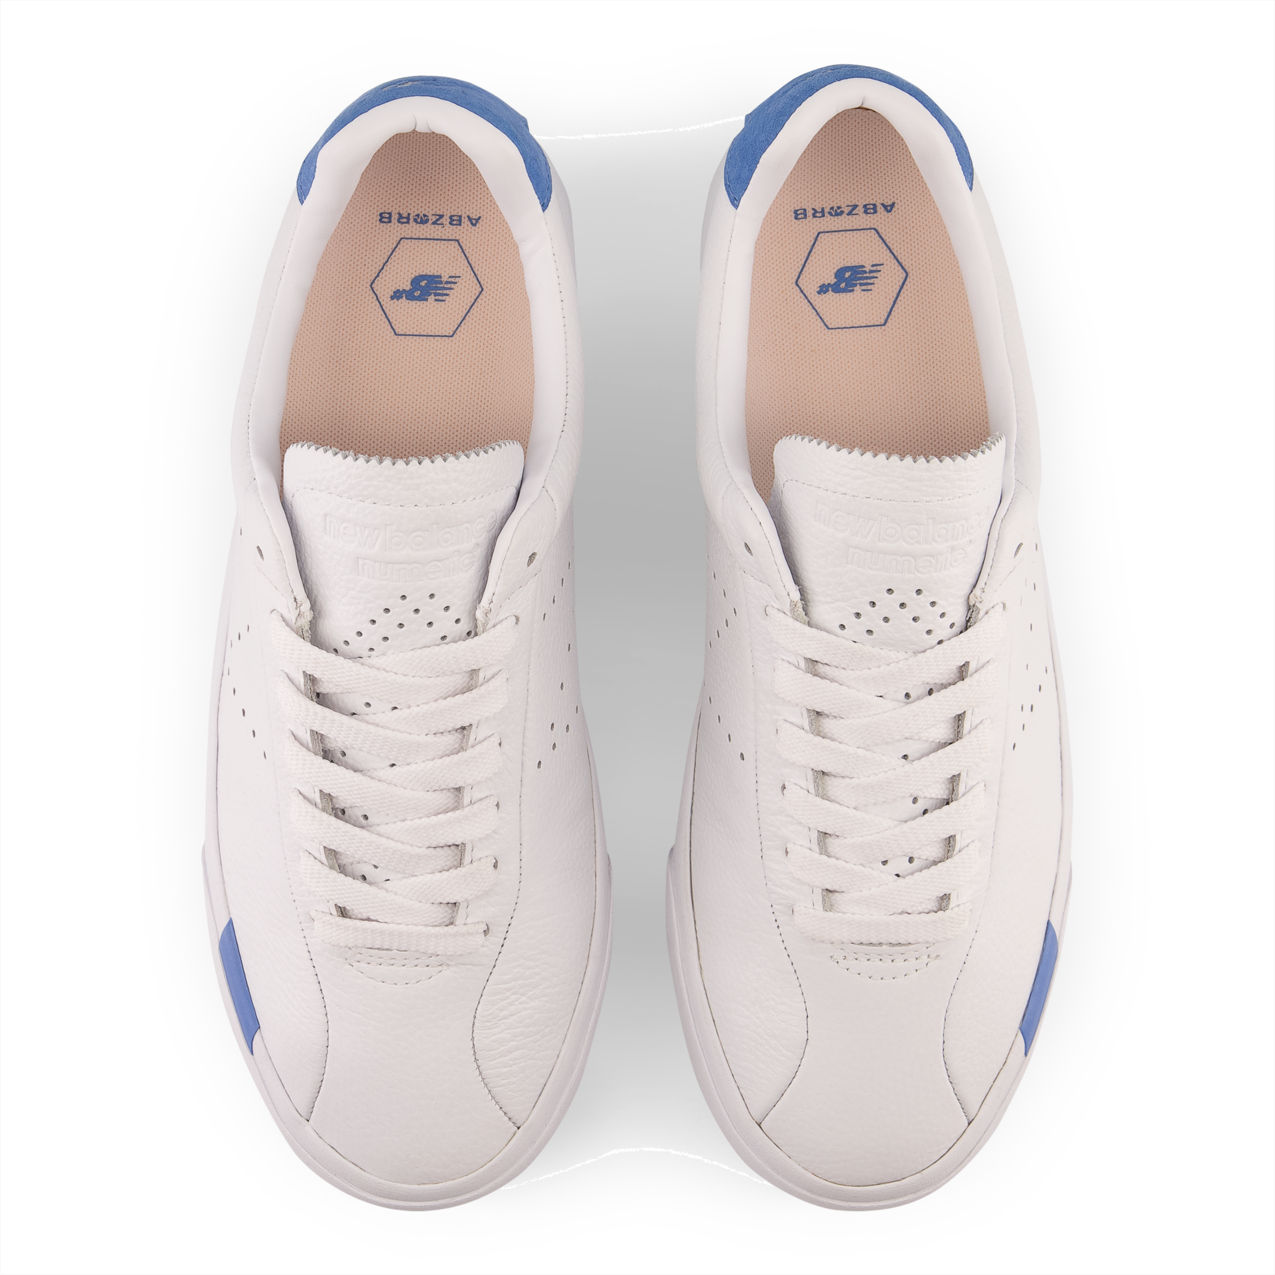 New Balance Numeric Men's 22 White Blue Shoes